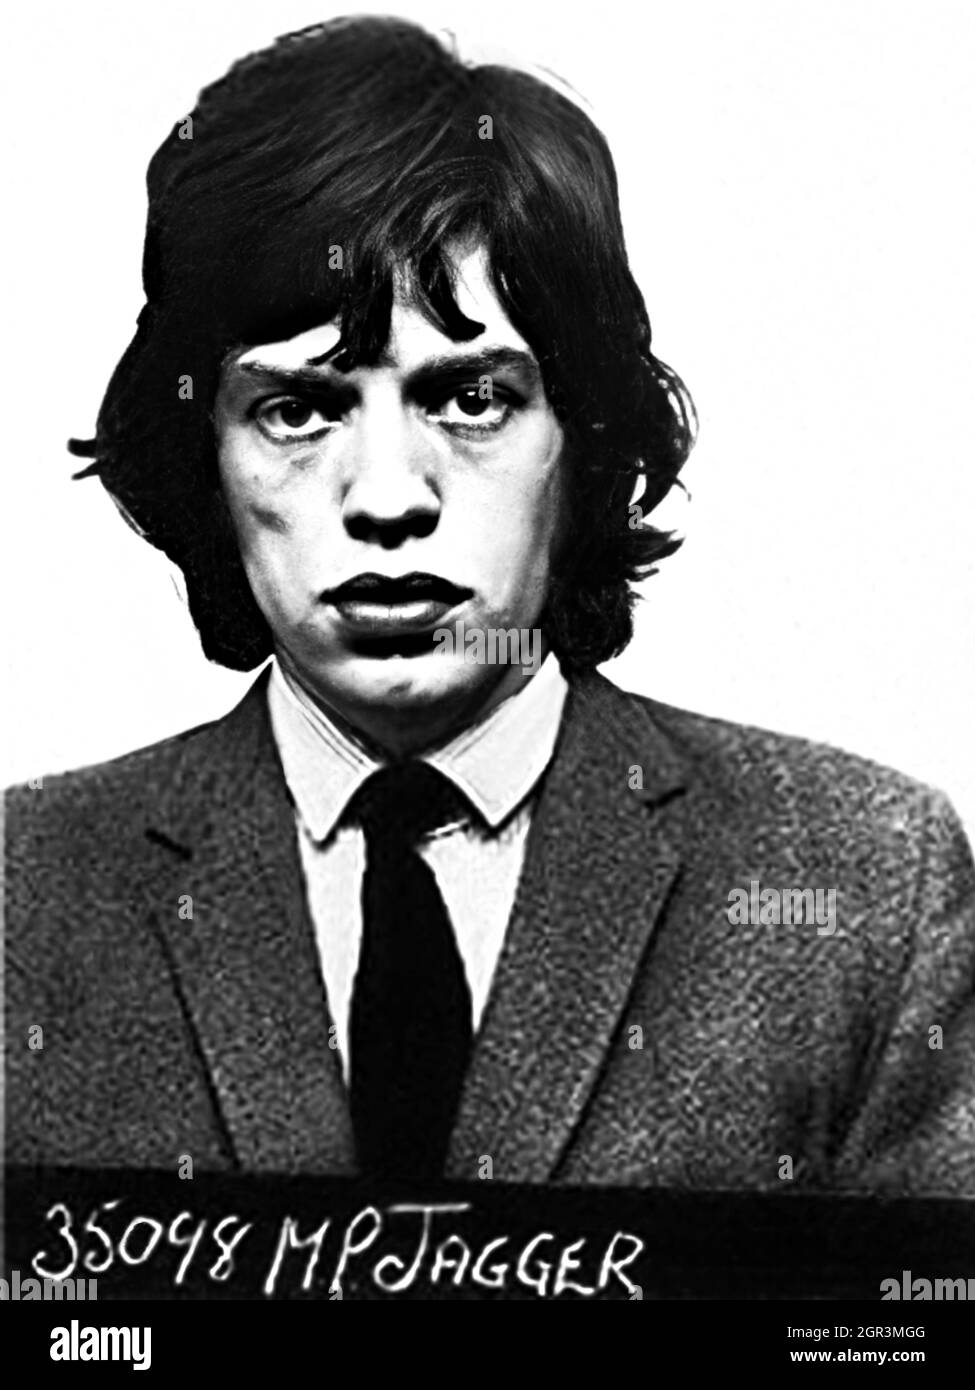 1967 , 12 february , Redlands, West Wittering , GREAT BRITAIN : The celebrated british Rock singer MICK JAGGER ( Sir Michael Philip Jagger , born   26 july 1943 ), member of group ROLLING STONES , when was arrested by Police for drug use during a party at guitarist Keith Richards' home. Police official mugshot , unknown photographer . - Mug sghot - MUG-SHOT - HISTORY - FOTO STORICHE  - MUSIC - MUSICA - cantante - COMPOSITORE - ROCK STAR - ROCKSTAR - ARRESTO - Arrestation - ARRESTATO DALLA POLIZIA - FOTO SEGNALETICA - mugshot - mug shot - rebel - ribelle  - HISTORY - FOTO STORICHE - PORTRAIT - Stock Photo